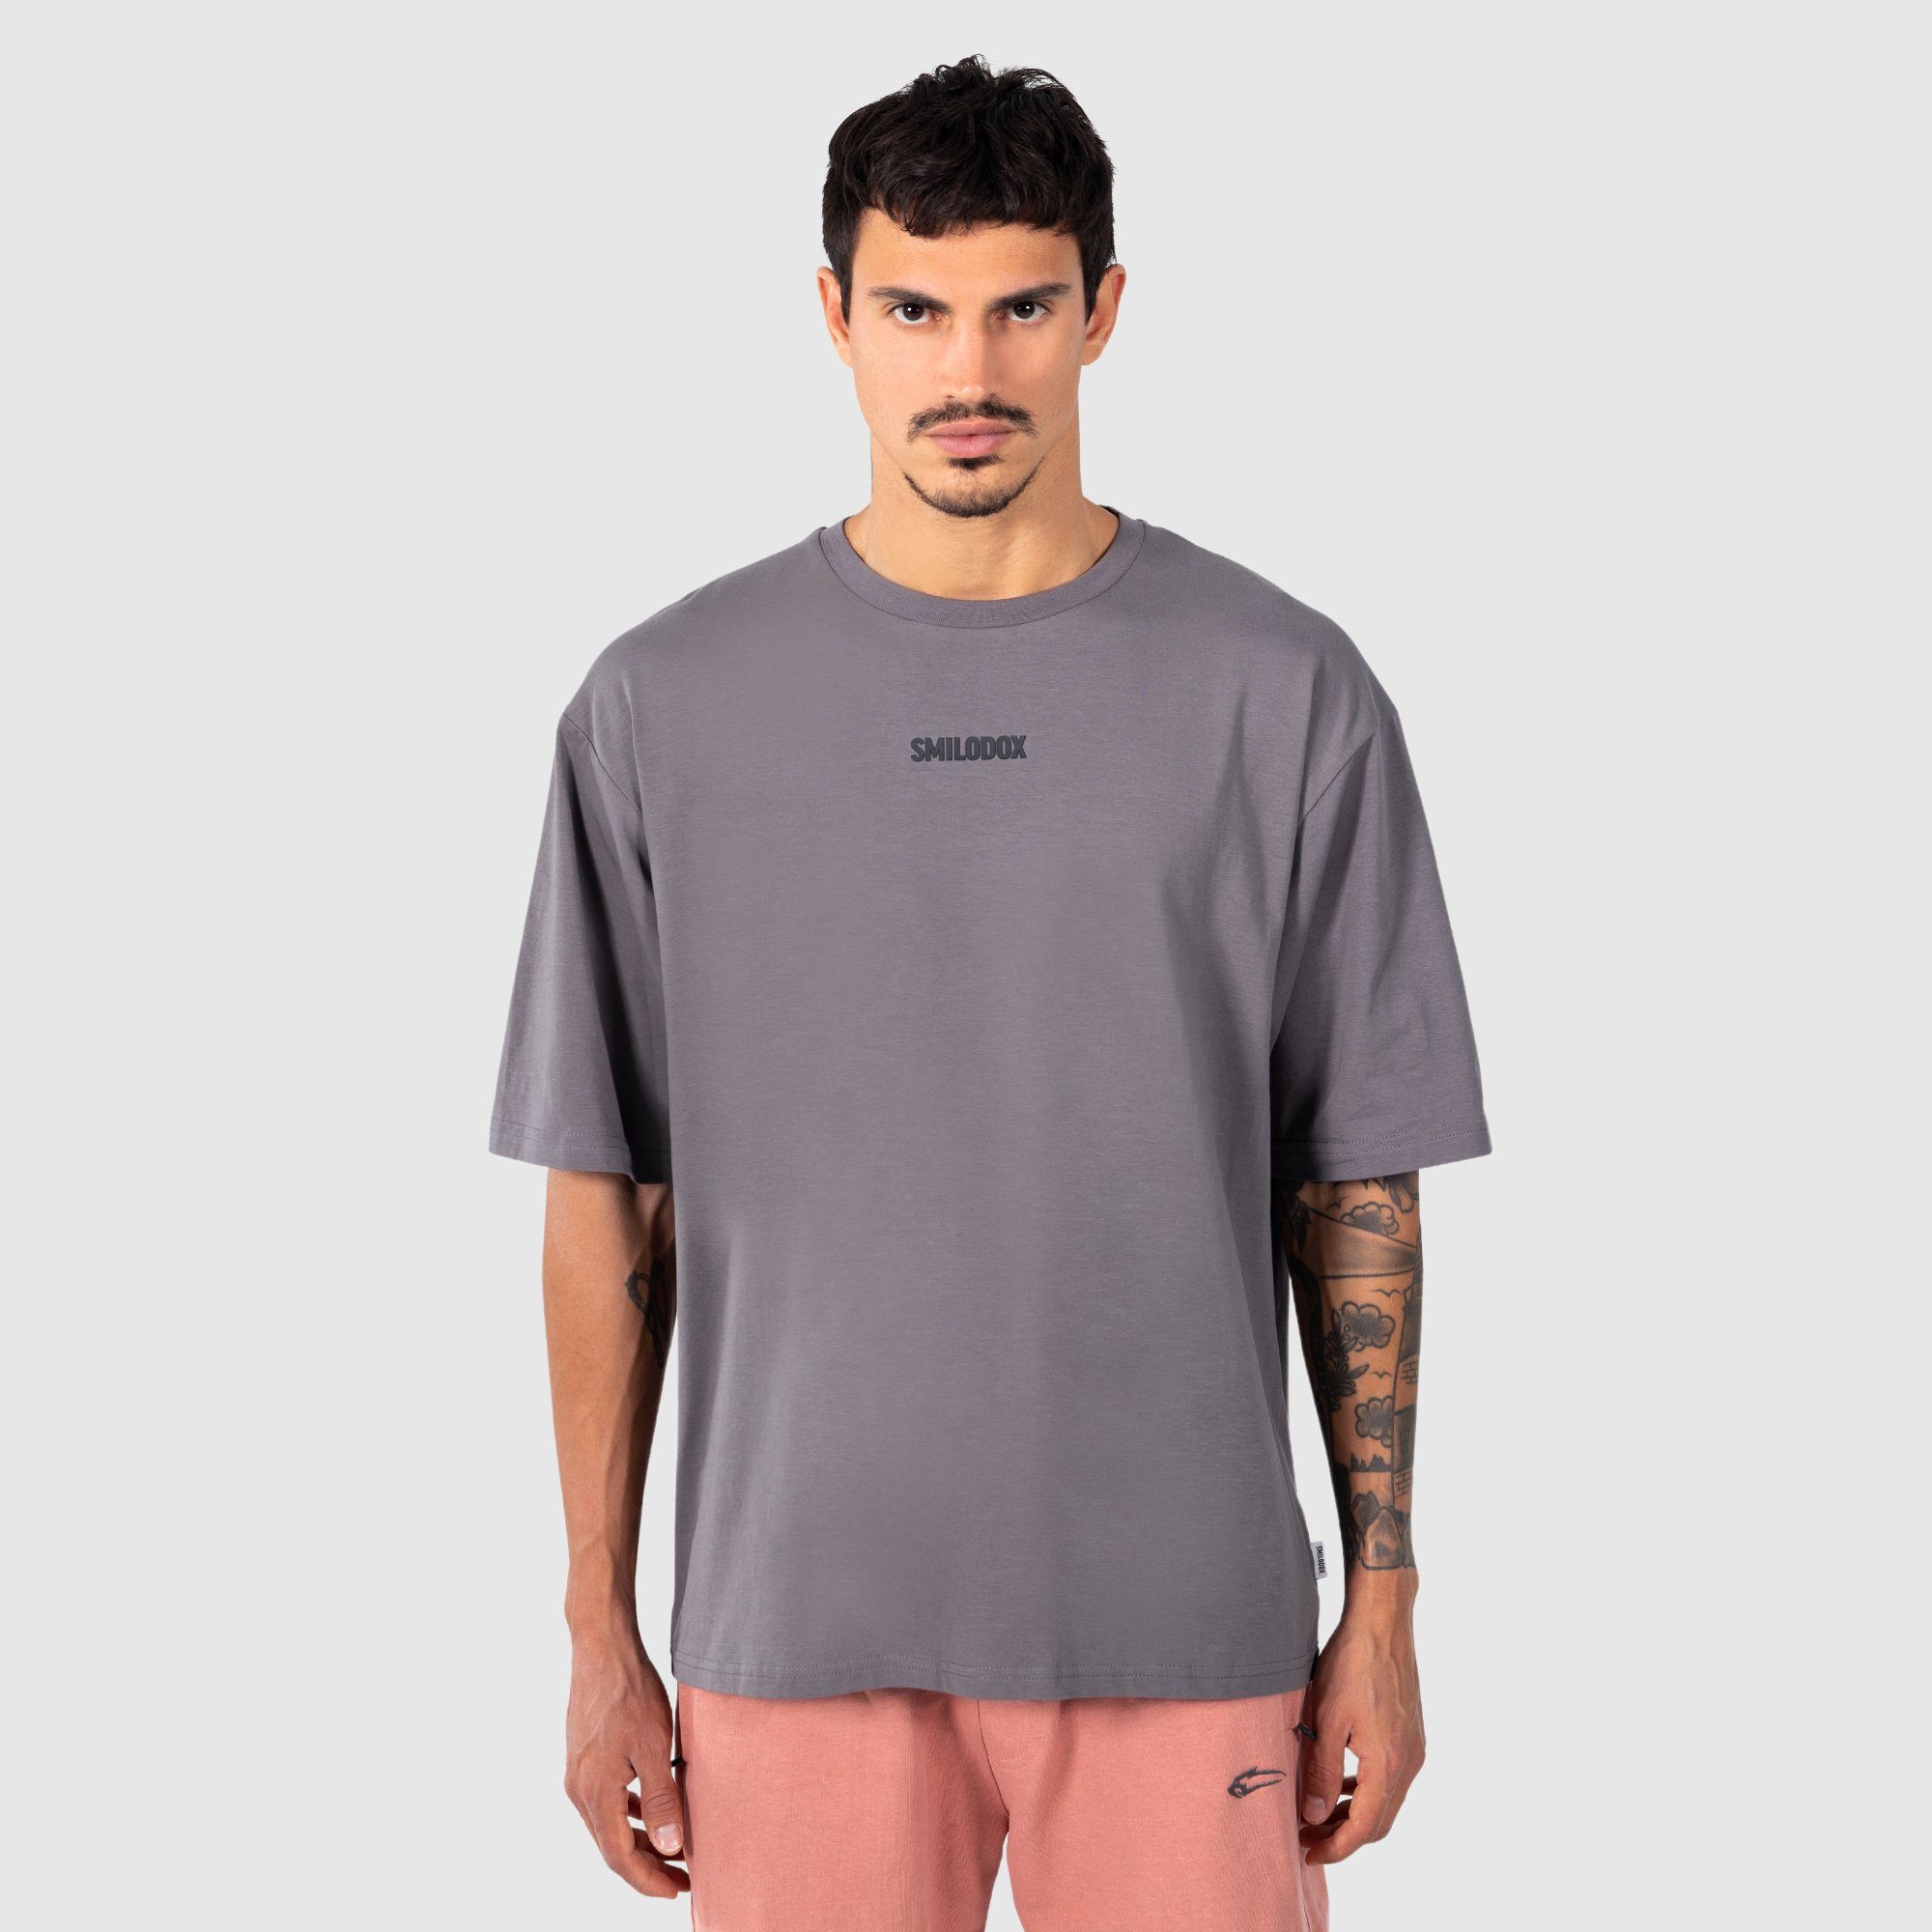 Grau Oversize Time Smilodox Off T-Shirt